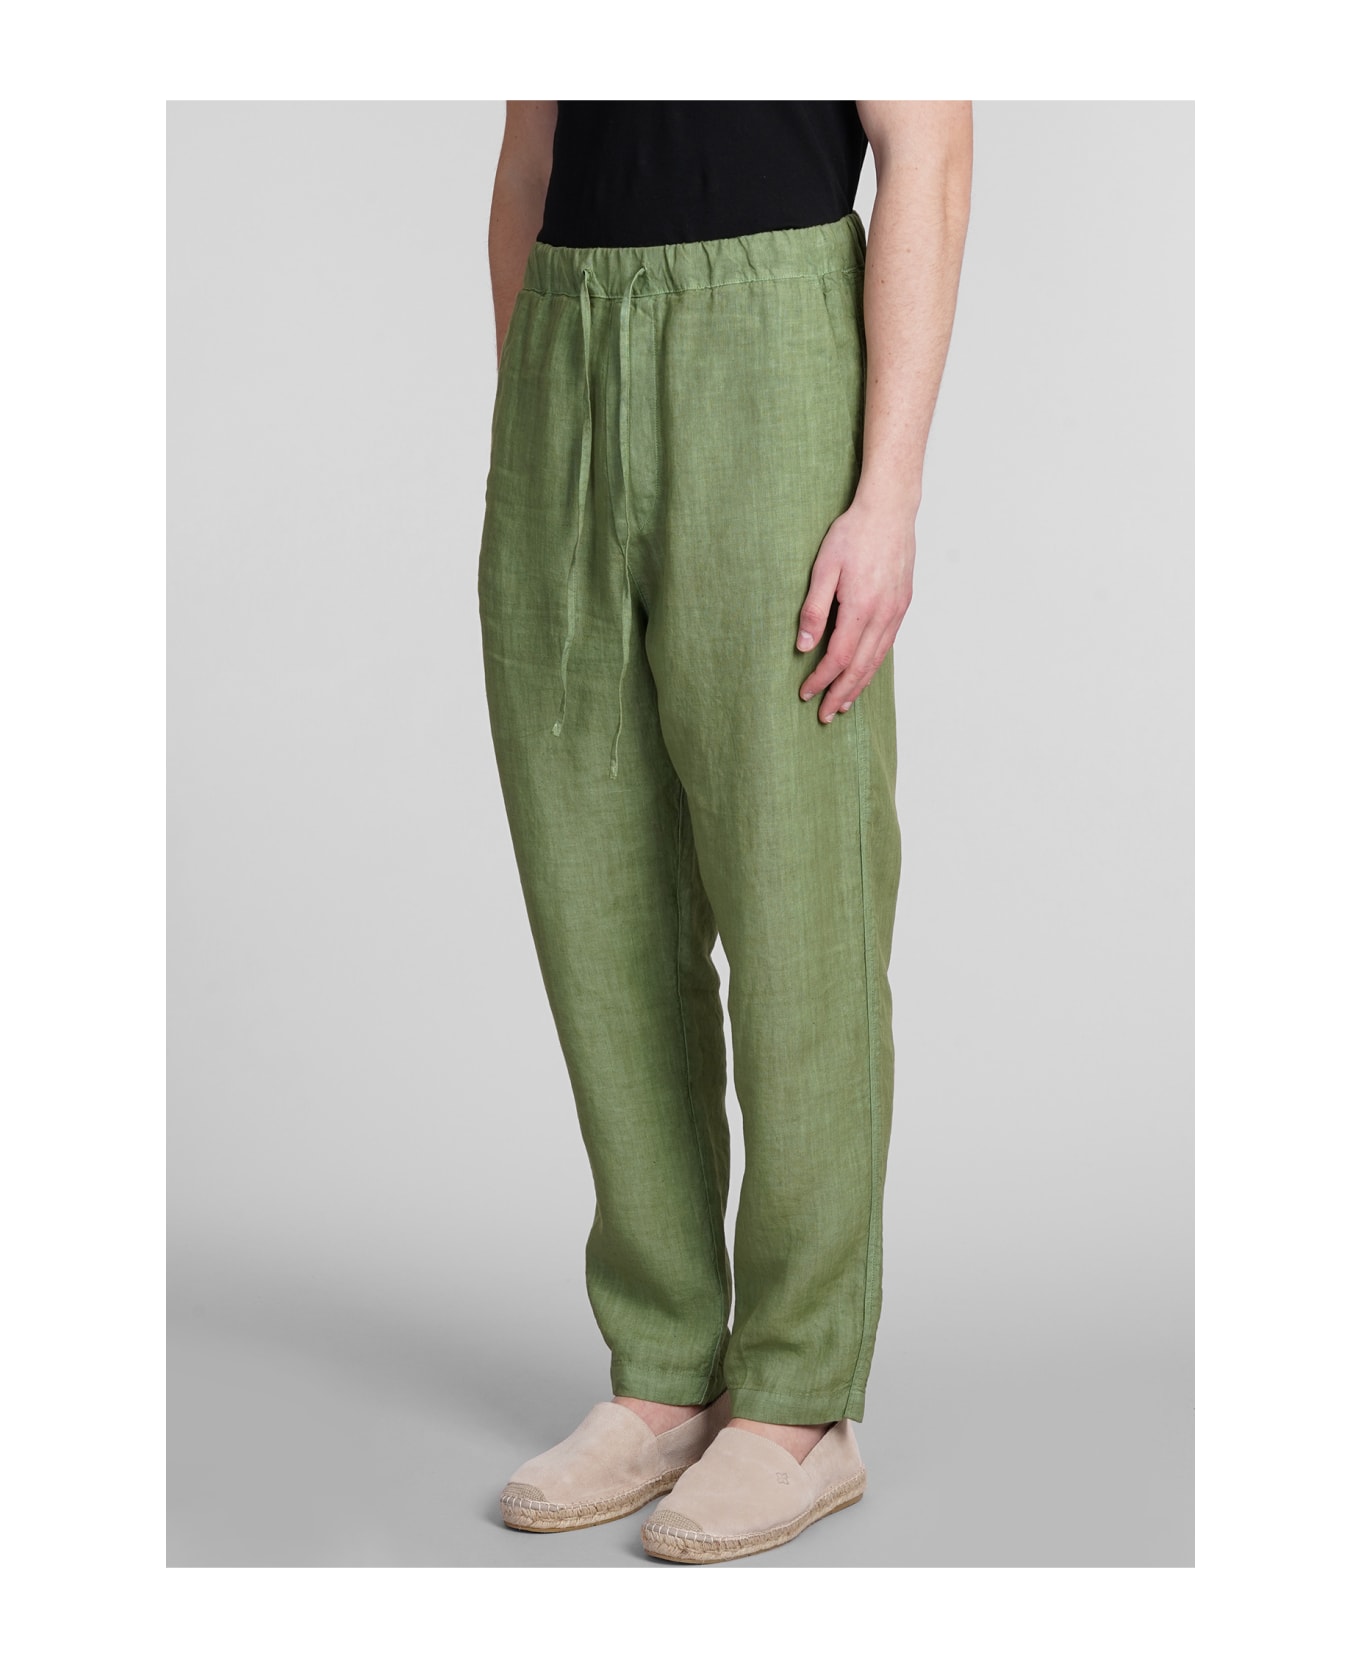 120% Lino Pants In Green Linen - green ボトムス